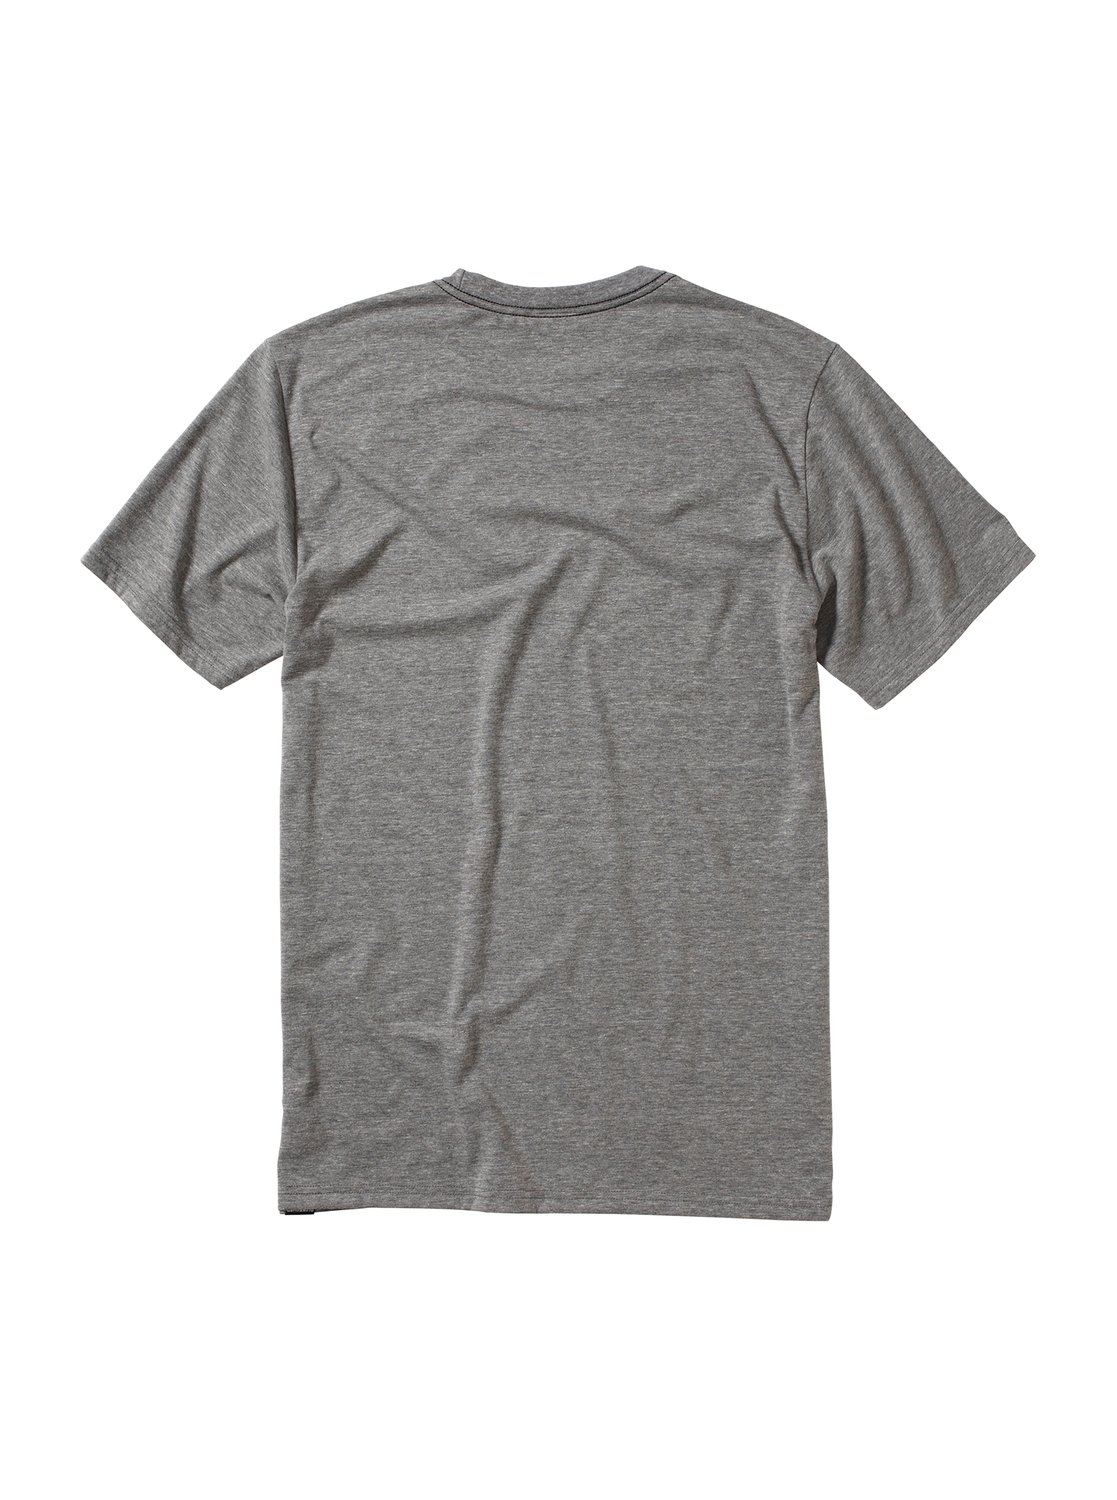 Blank Premium Heather Slim Fit T-Shirt AQYZT00437 | Quiksilver